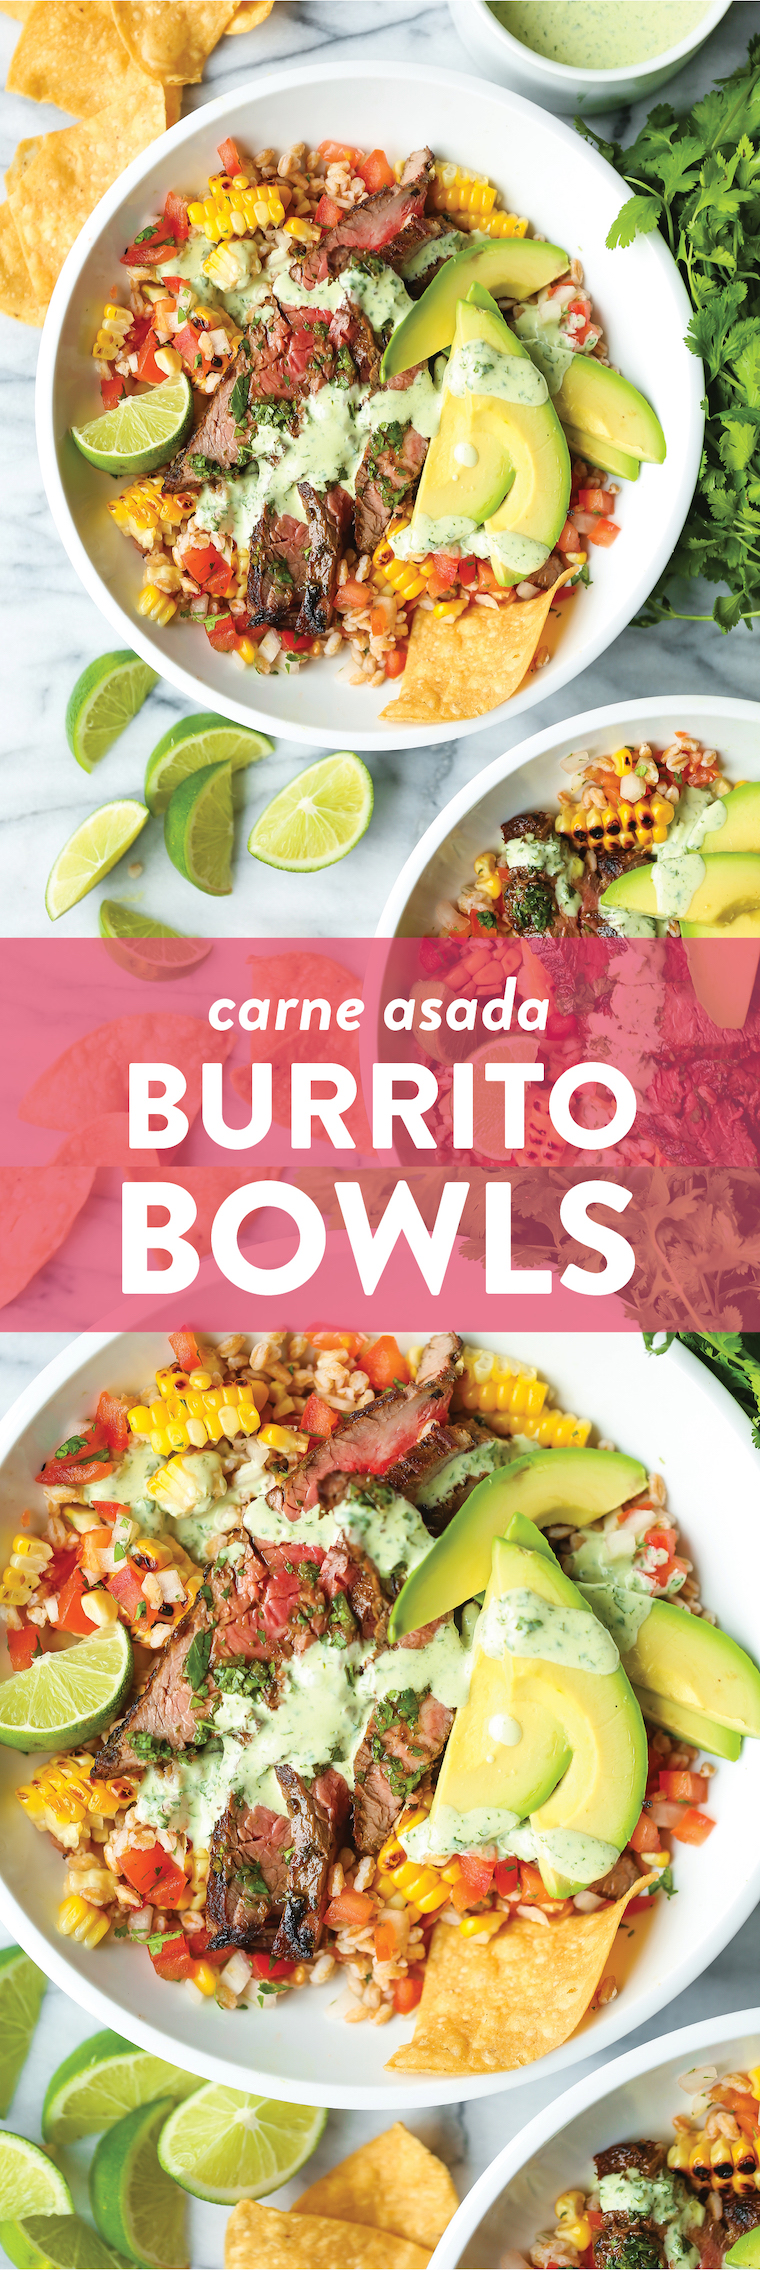 Carne Asada Burrito Bowls - Pico, corn, avocado, cilantro, lime wedges and the best carne asada EVER. Drizzled with cilantro lime vinaigrette. SO SO BOMB.